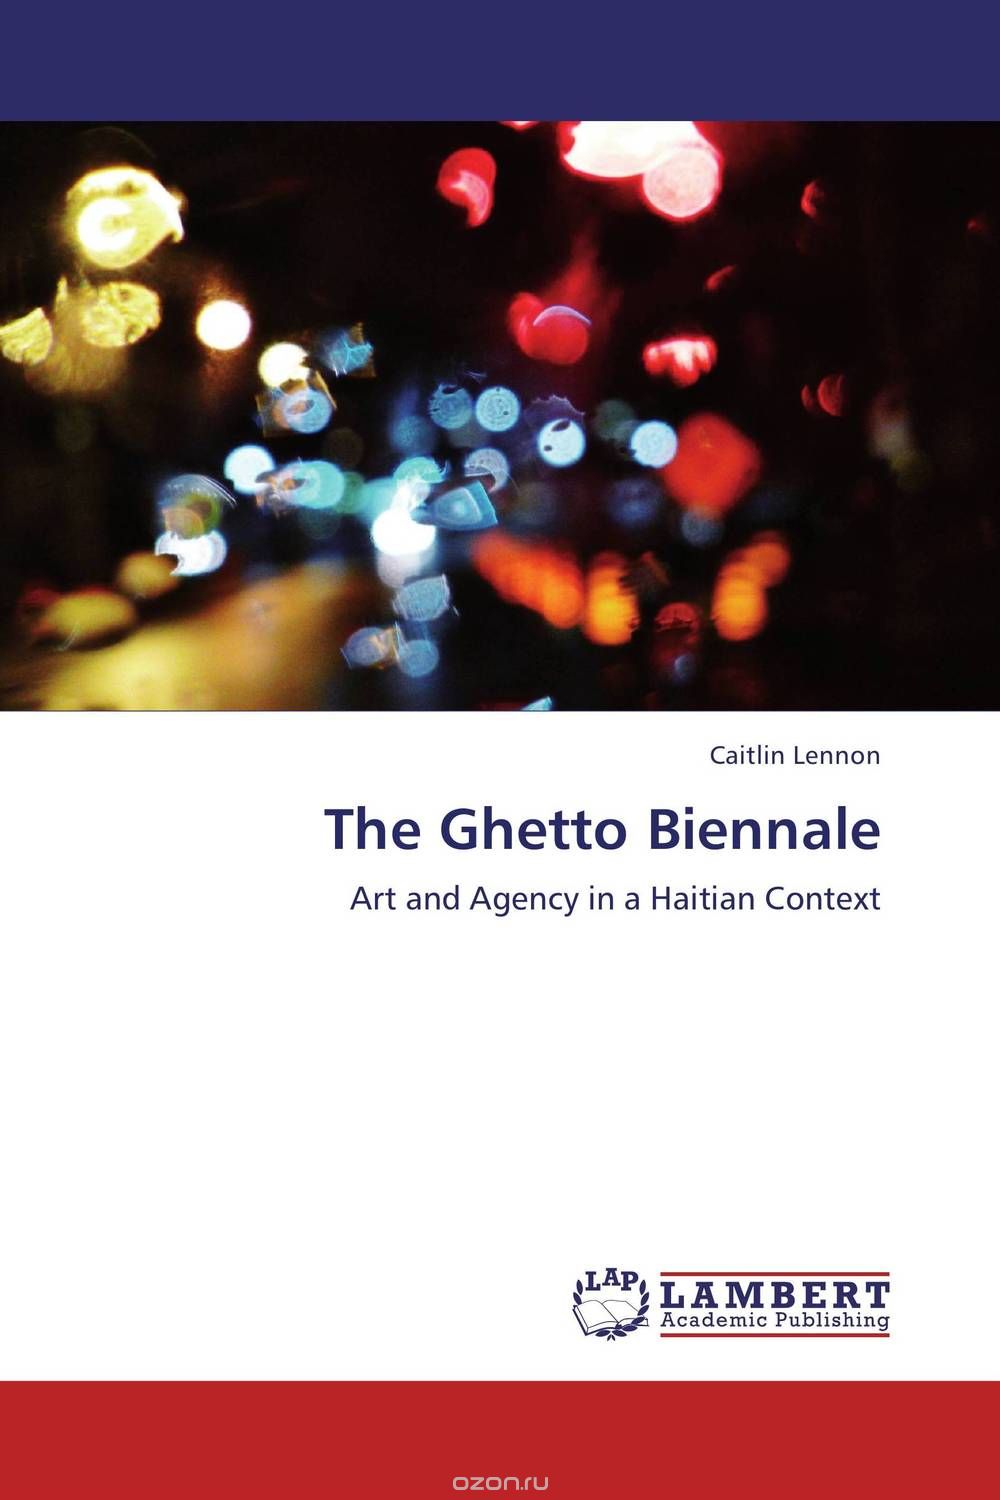 Скачать книгу "The Ghetto Biennale"